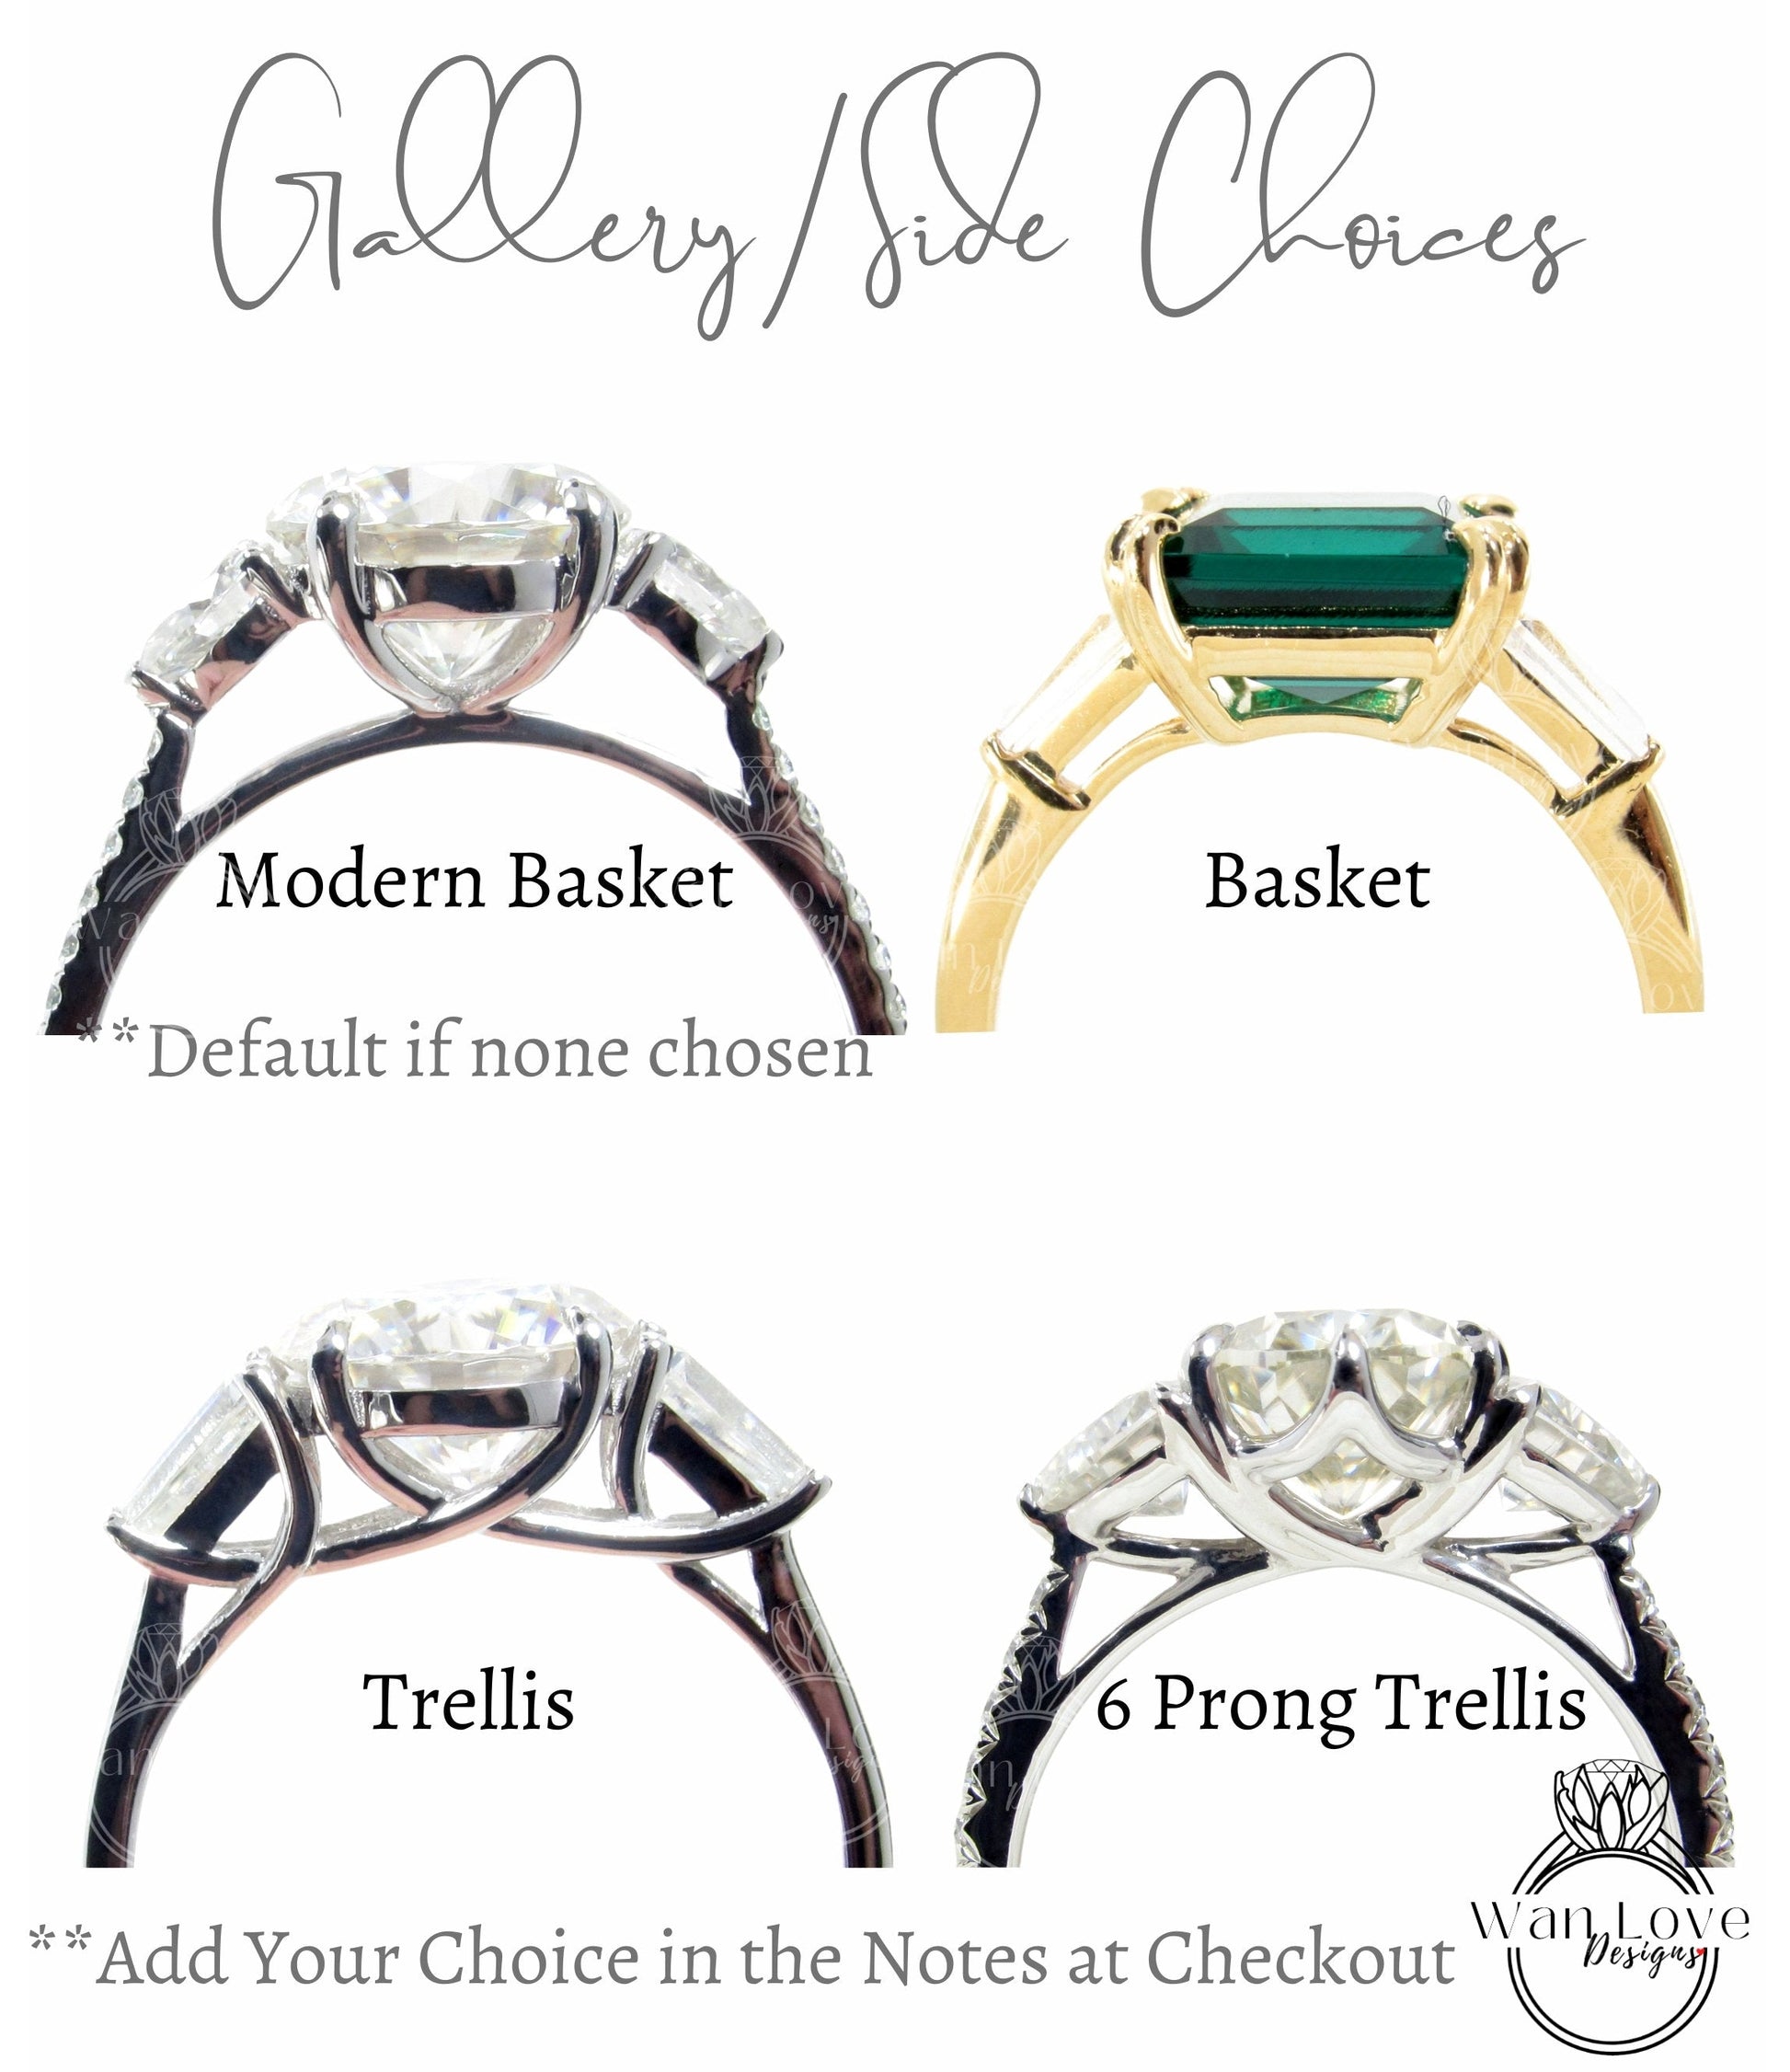 Emerald cut Moissanite engagement ring white gold 3 gem stone cluster ring art deco tapered baguette ring antique diamond anniversary ring Wan Love Designs